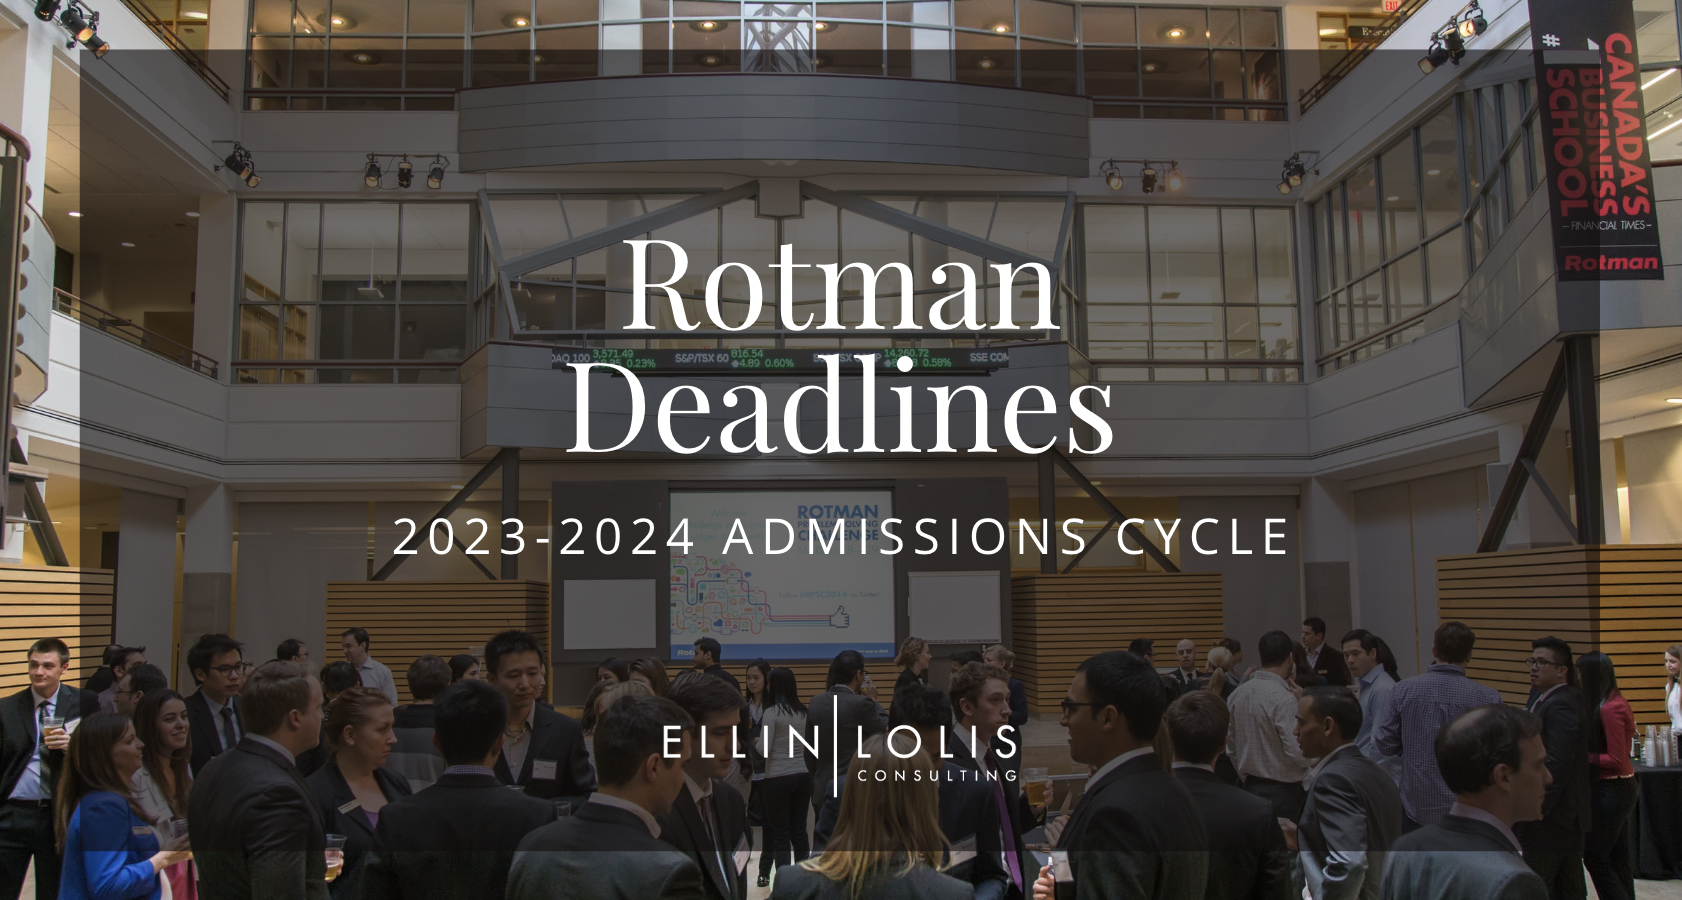 Rotman MBA Deadlines for 2023-2024